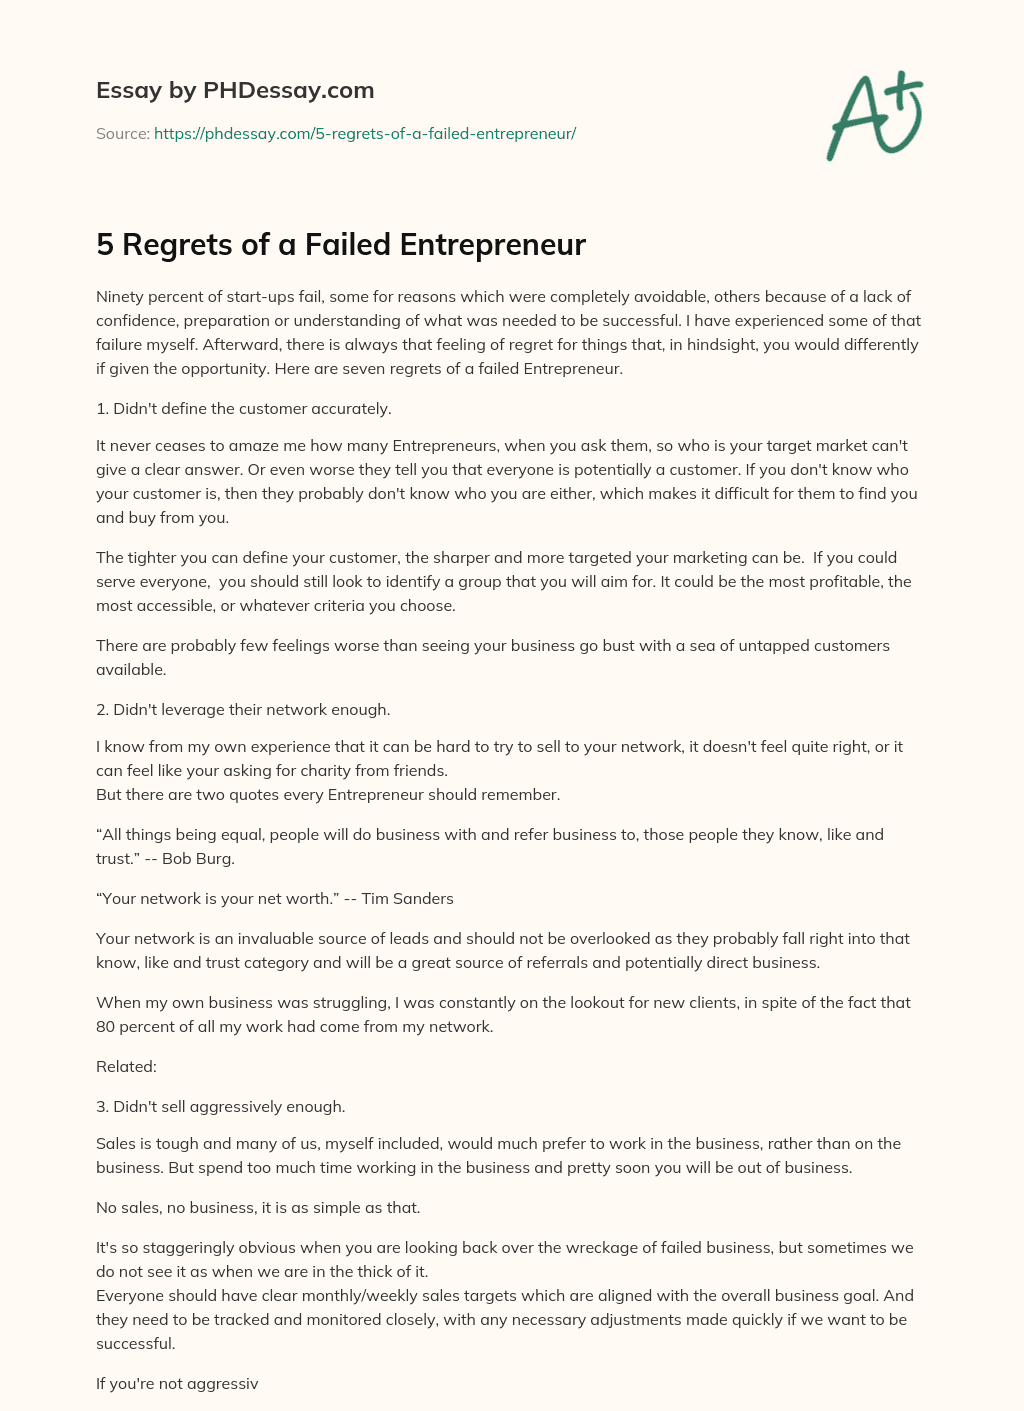 5 Regrets of a Failed Entrepreneur essay